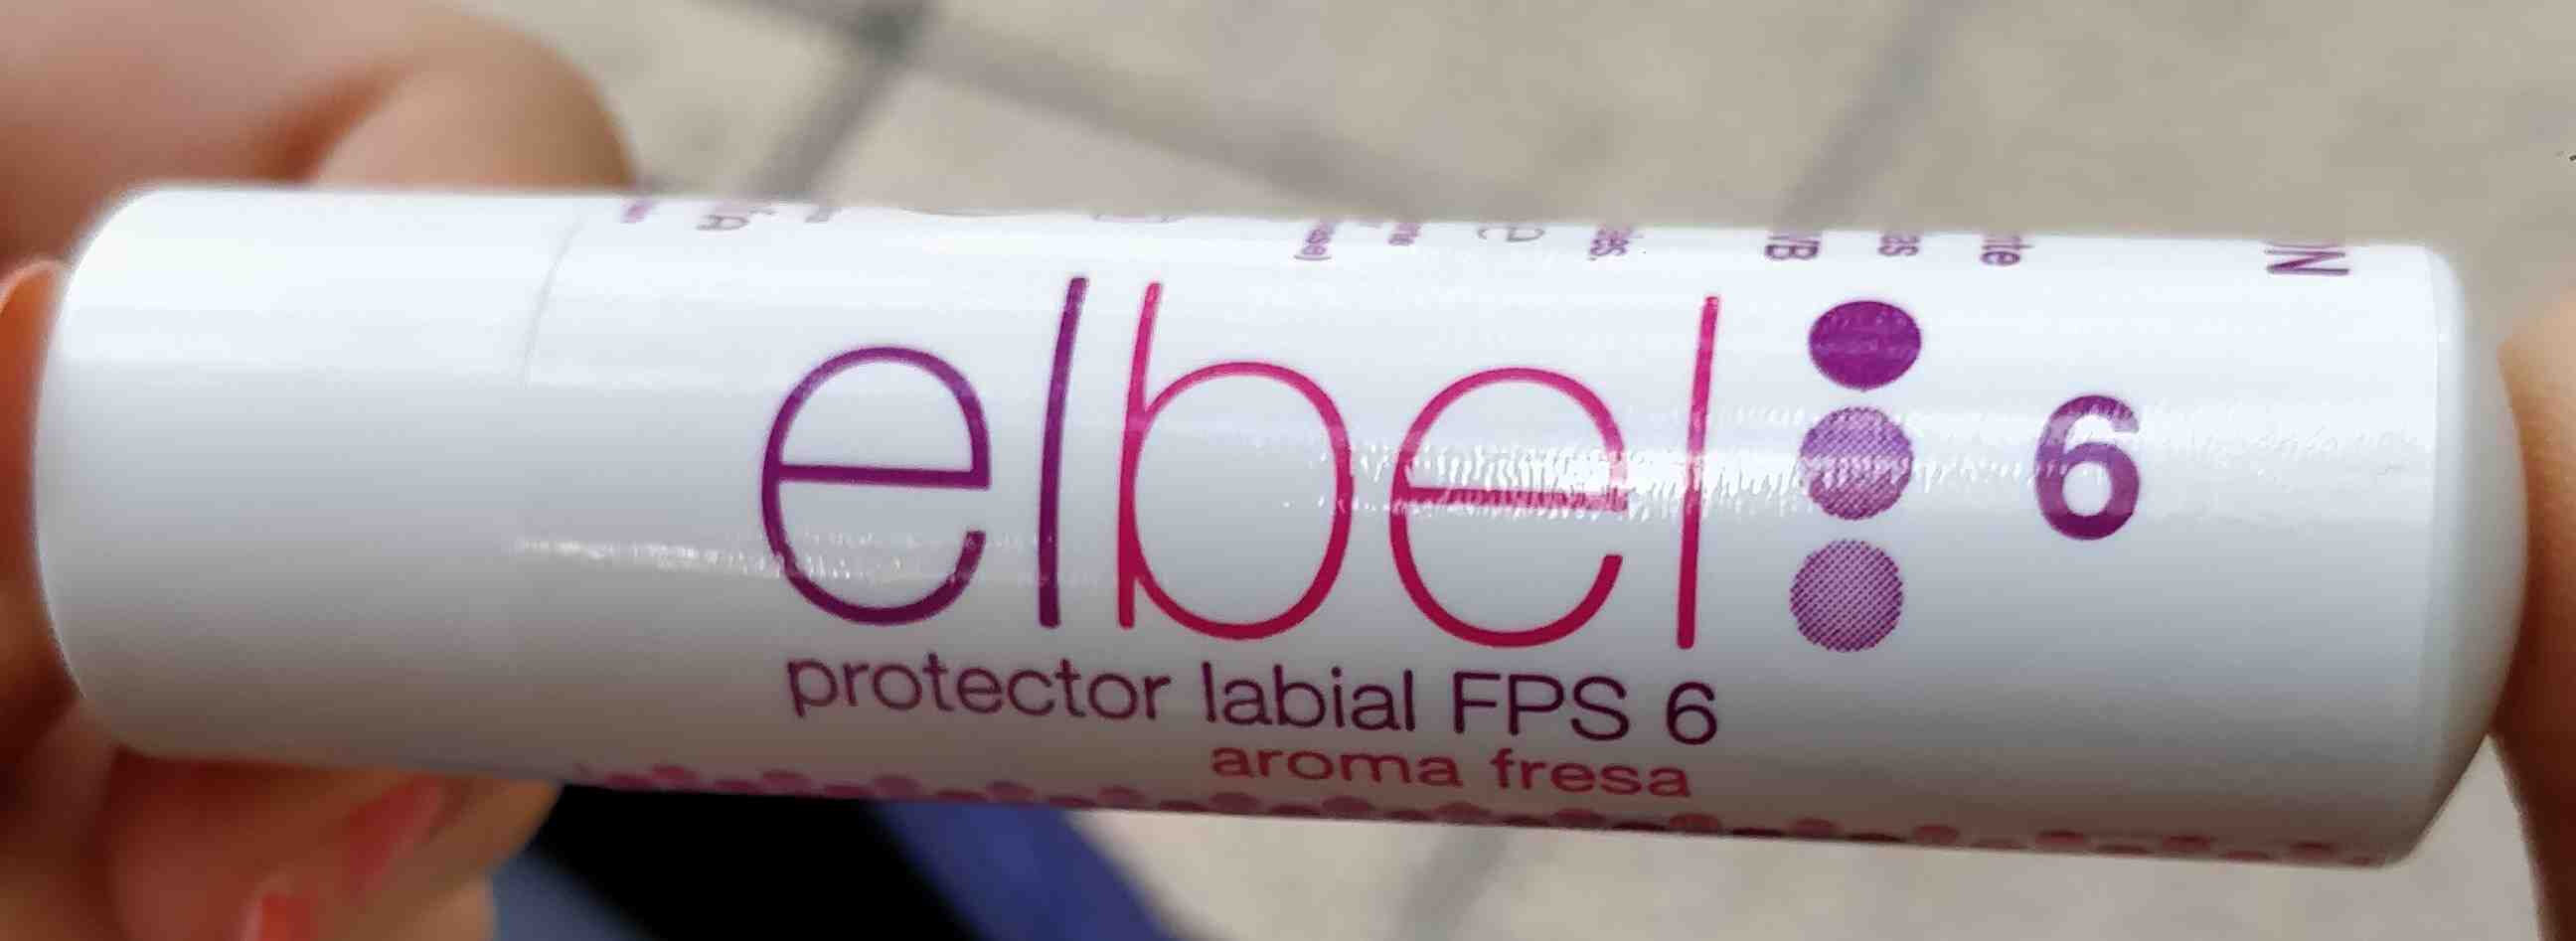 Protector labial FPS 6 aroma fresa - מוצר - en